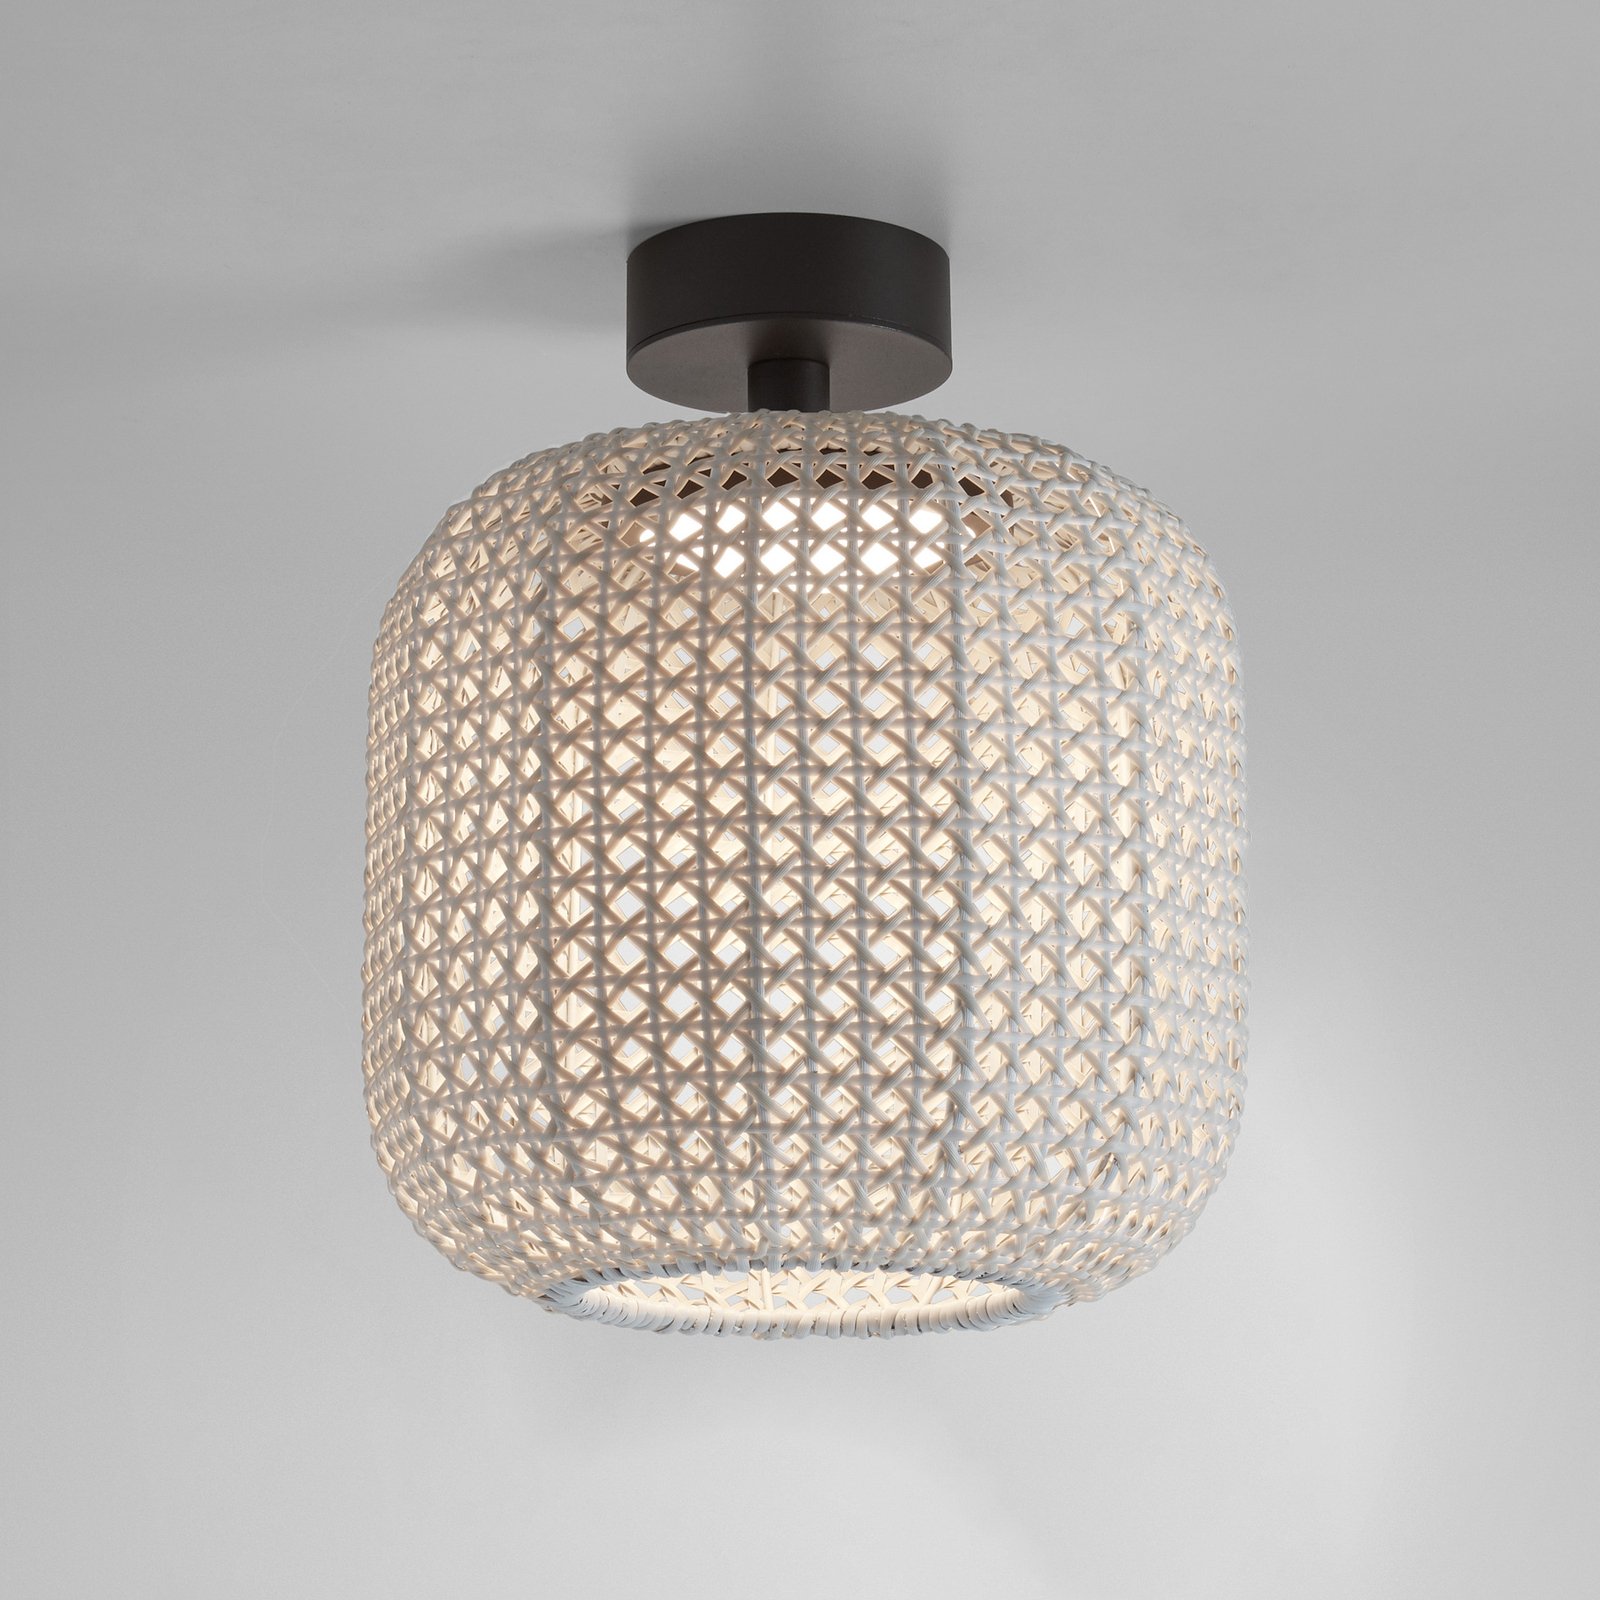 Lampa sufitowa zewnętrzna Bover Nans PF/31 LED, beżowa